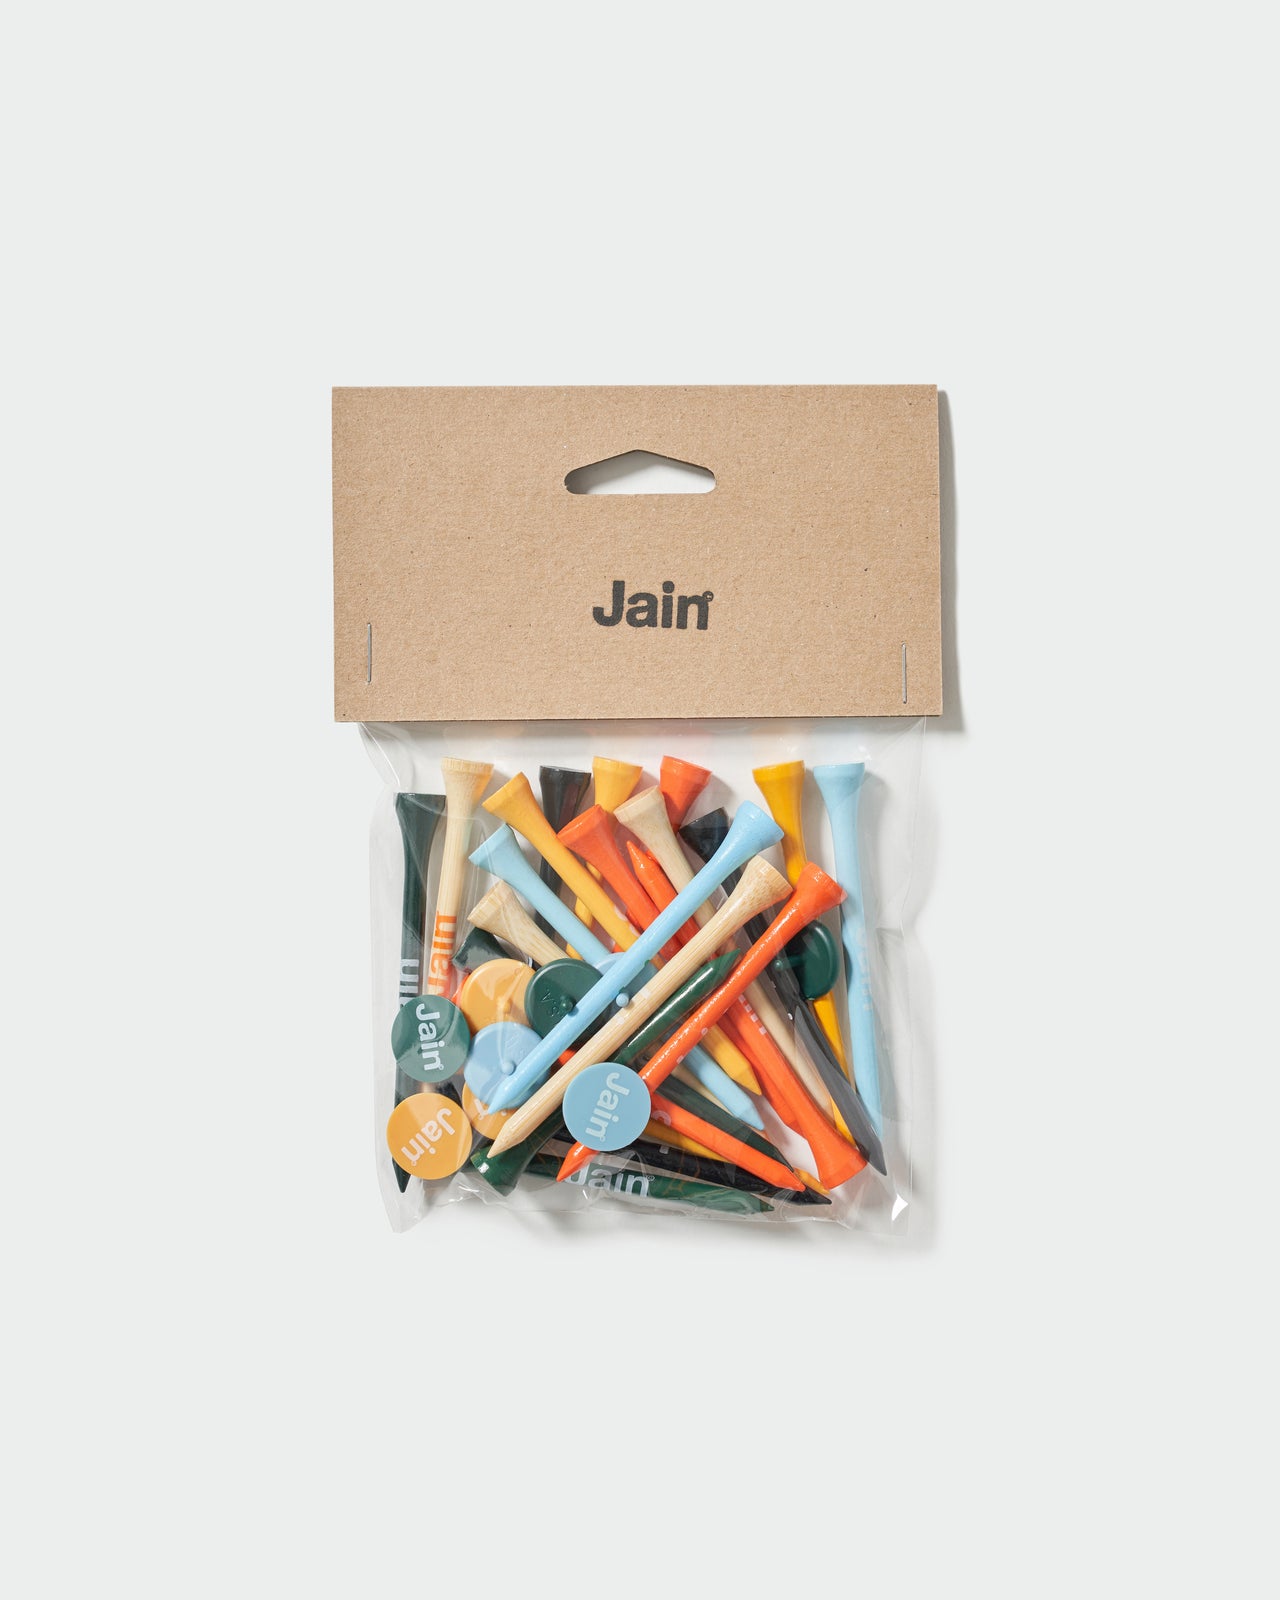 Jain Candy (Tees & Ball Markers)